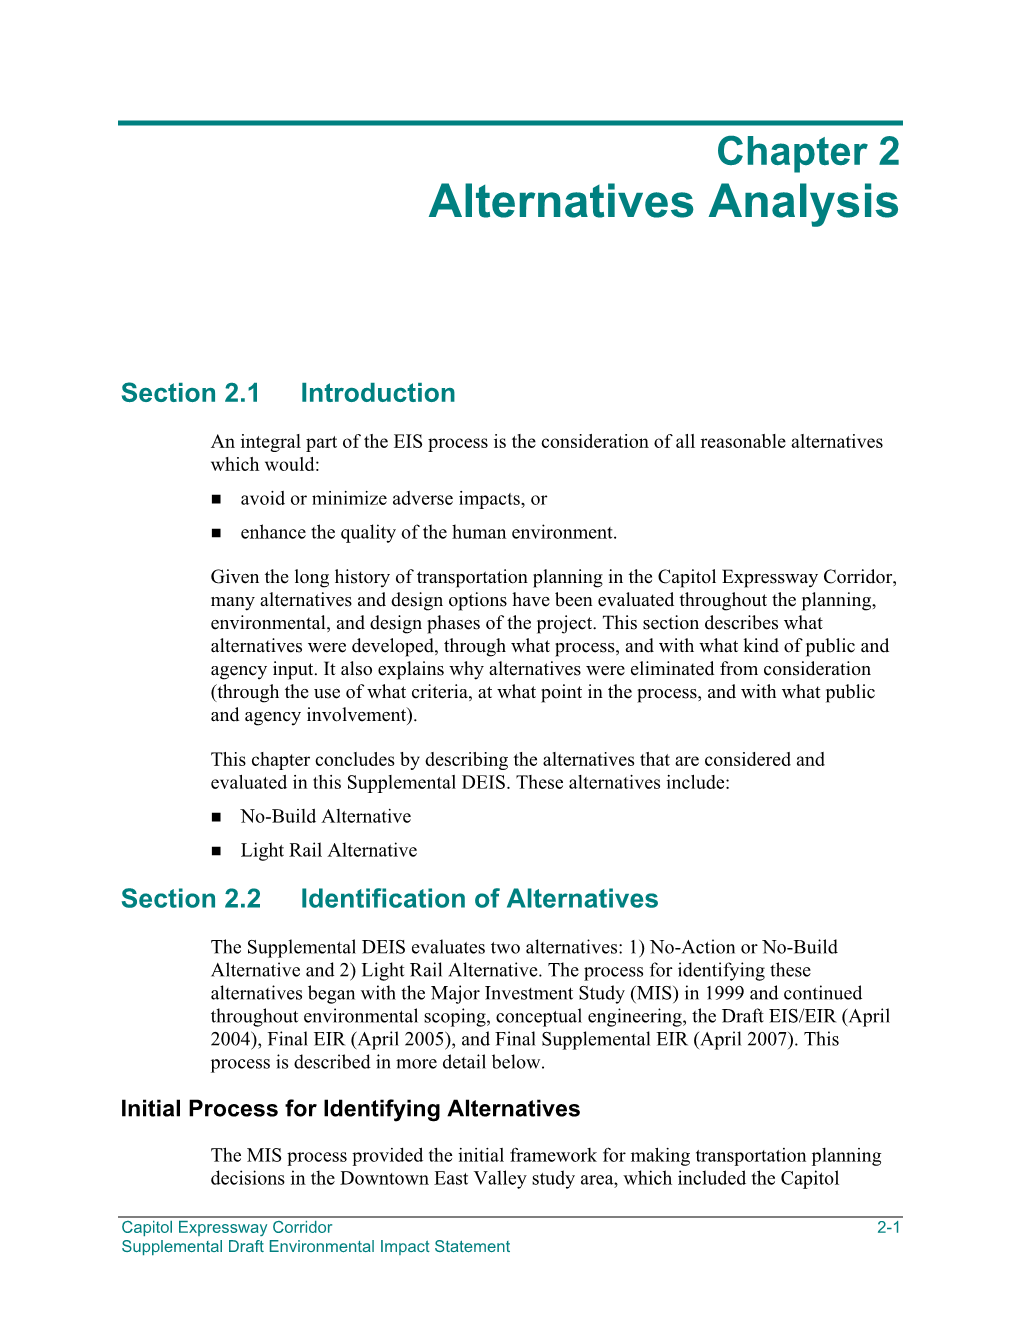 Chapter 2, Alternatives Analysis